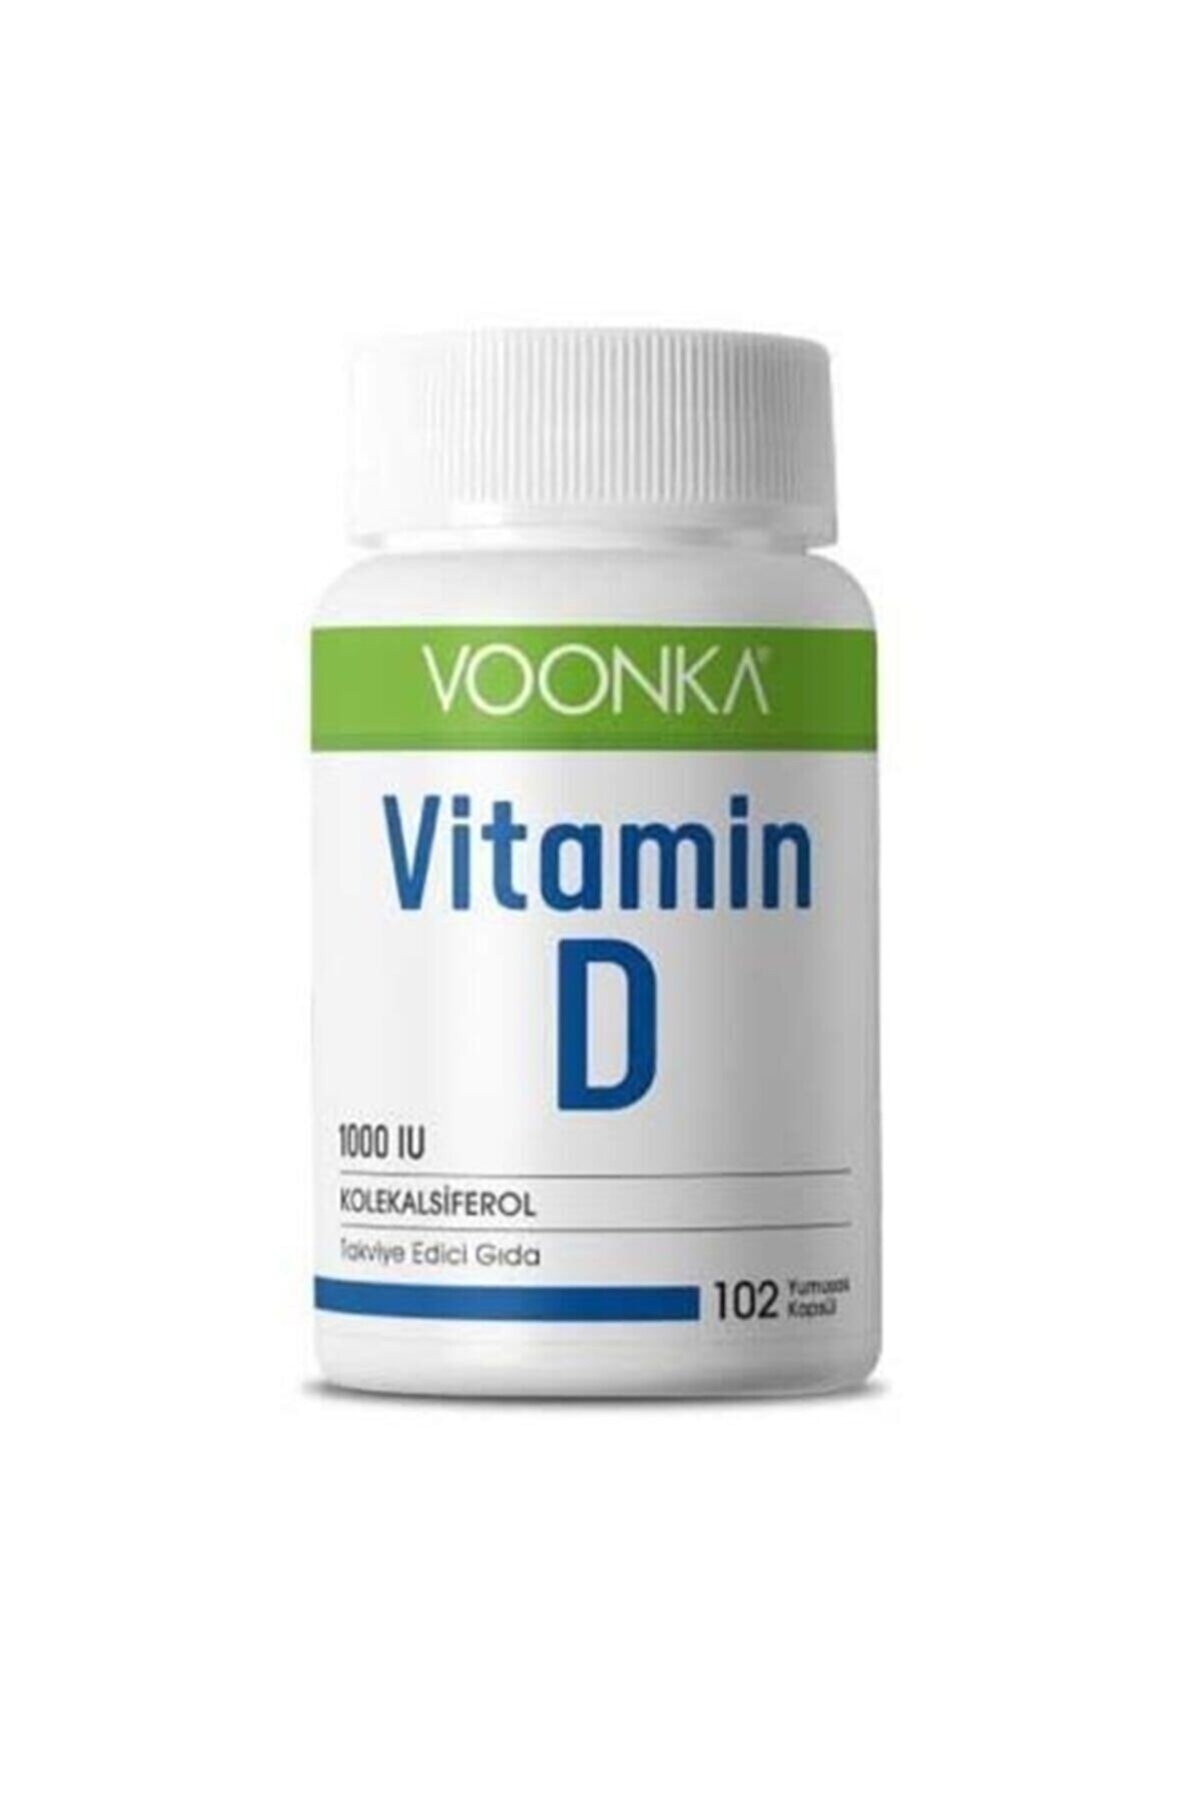 Voonka Vitamin D 1000 Iu 102 Tablet